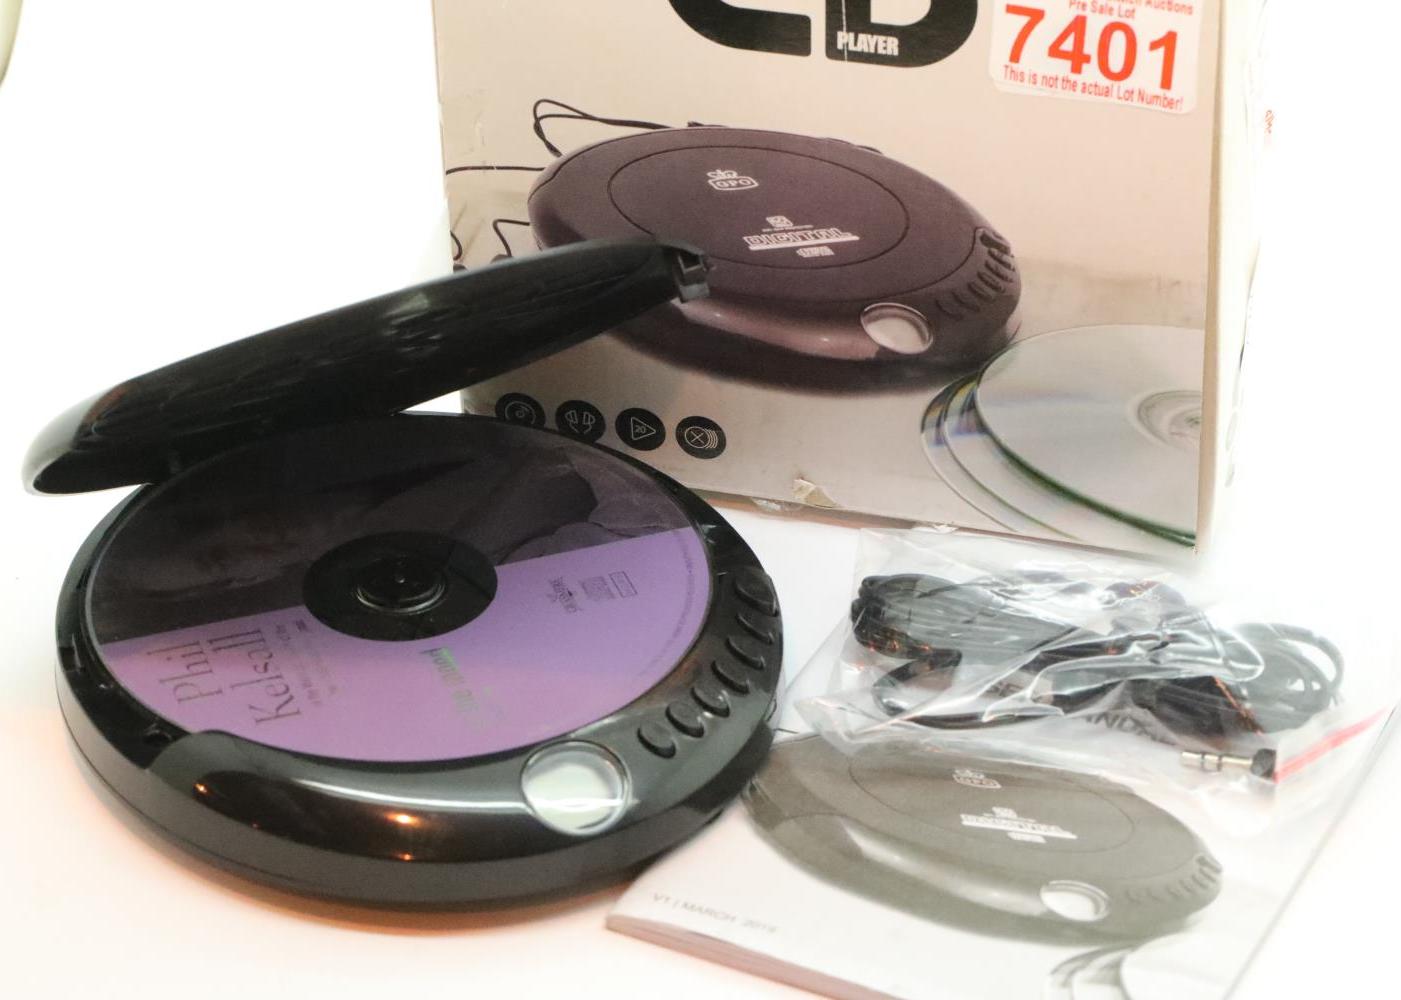 GPO Discman, portable CD player; 3.5mm earphone jack & 4.5V DC in Jack; 60 sec. Anti-Shock function;